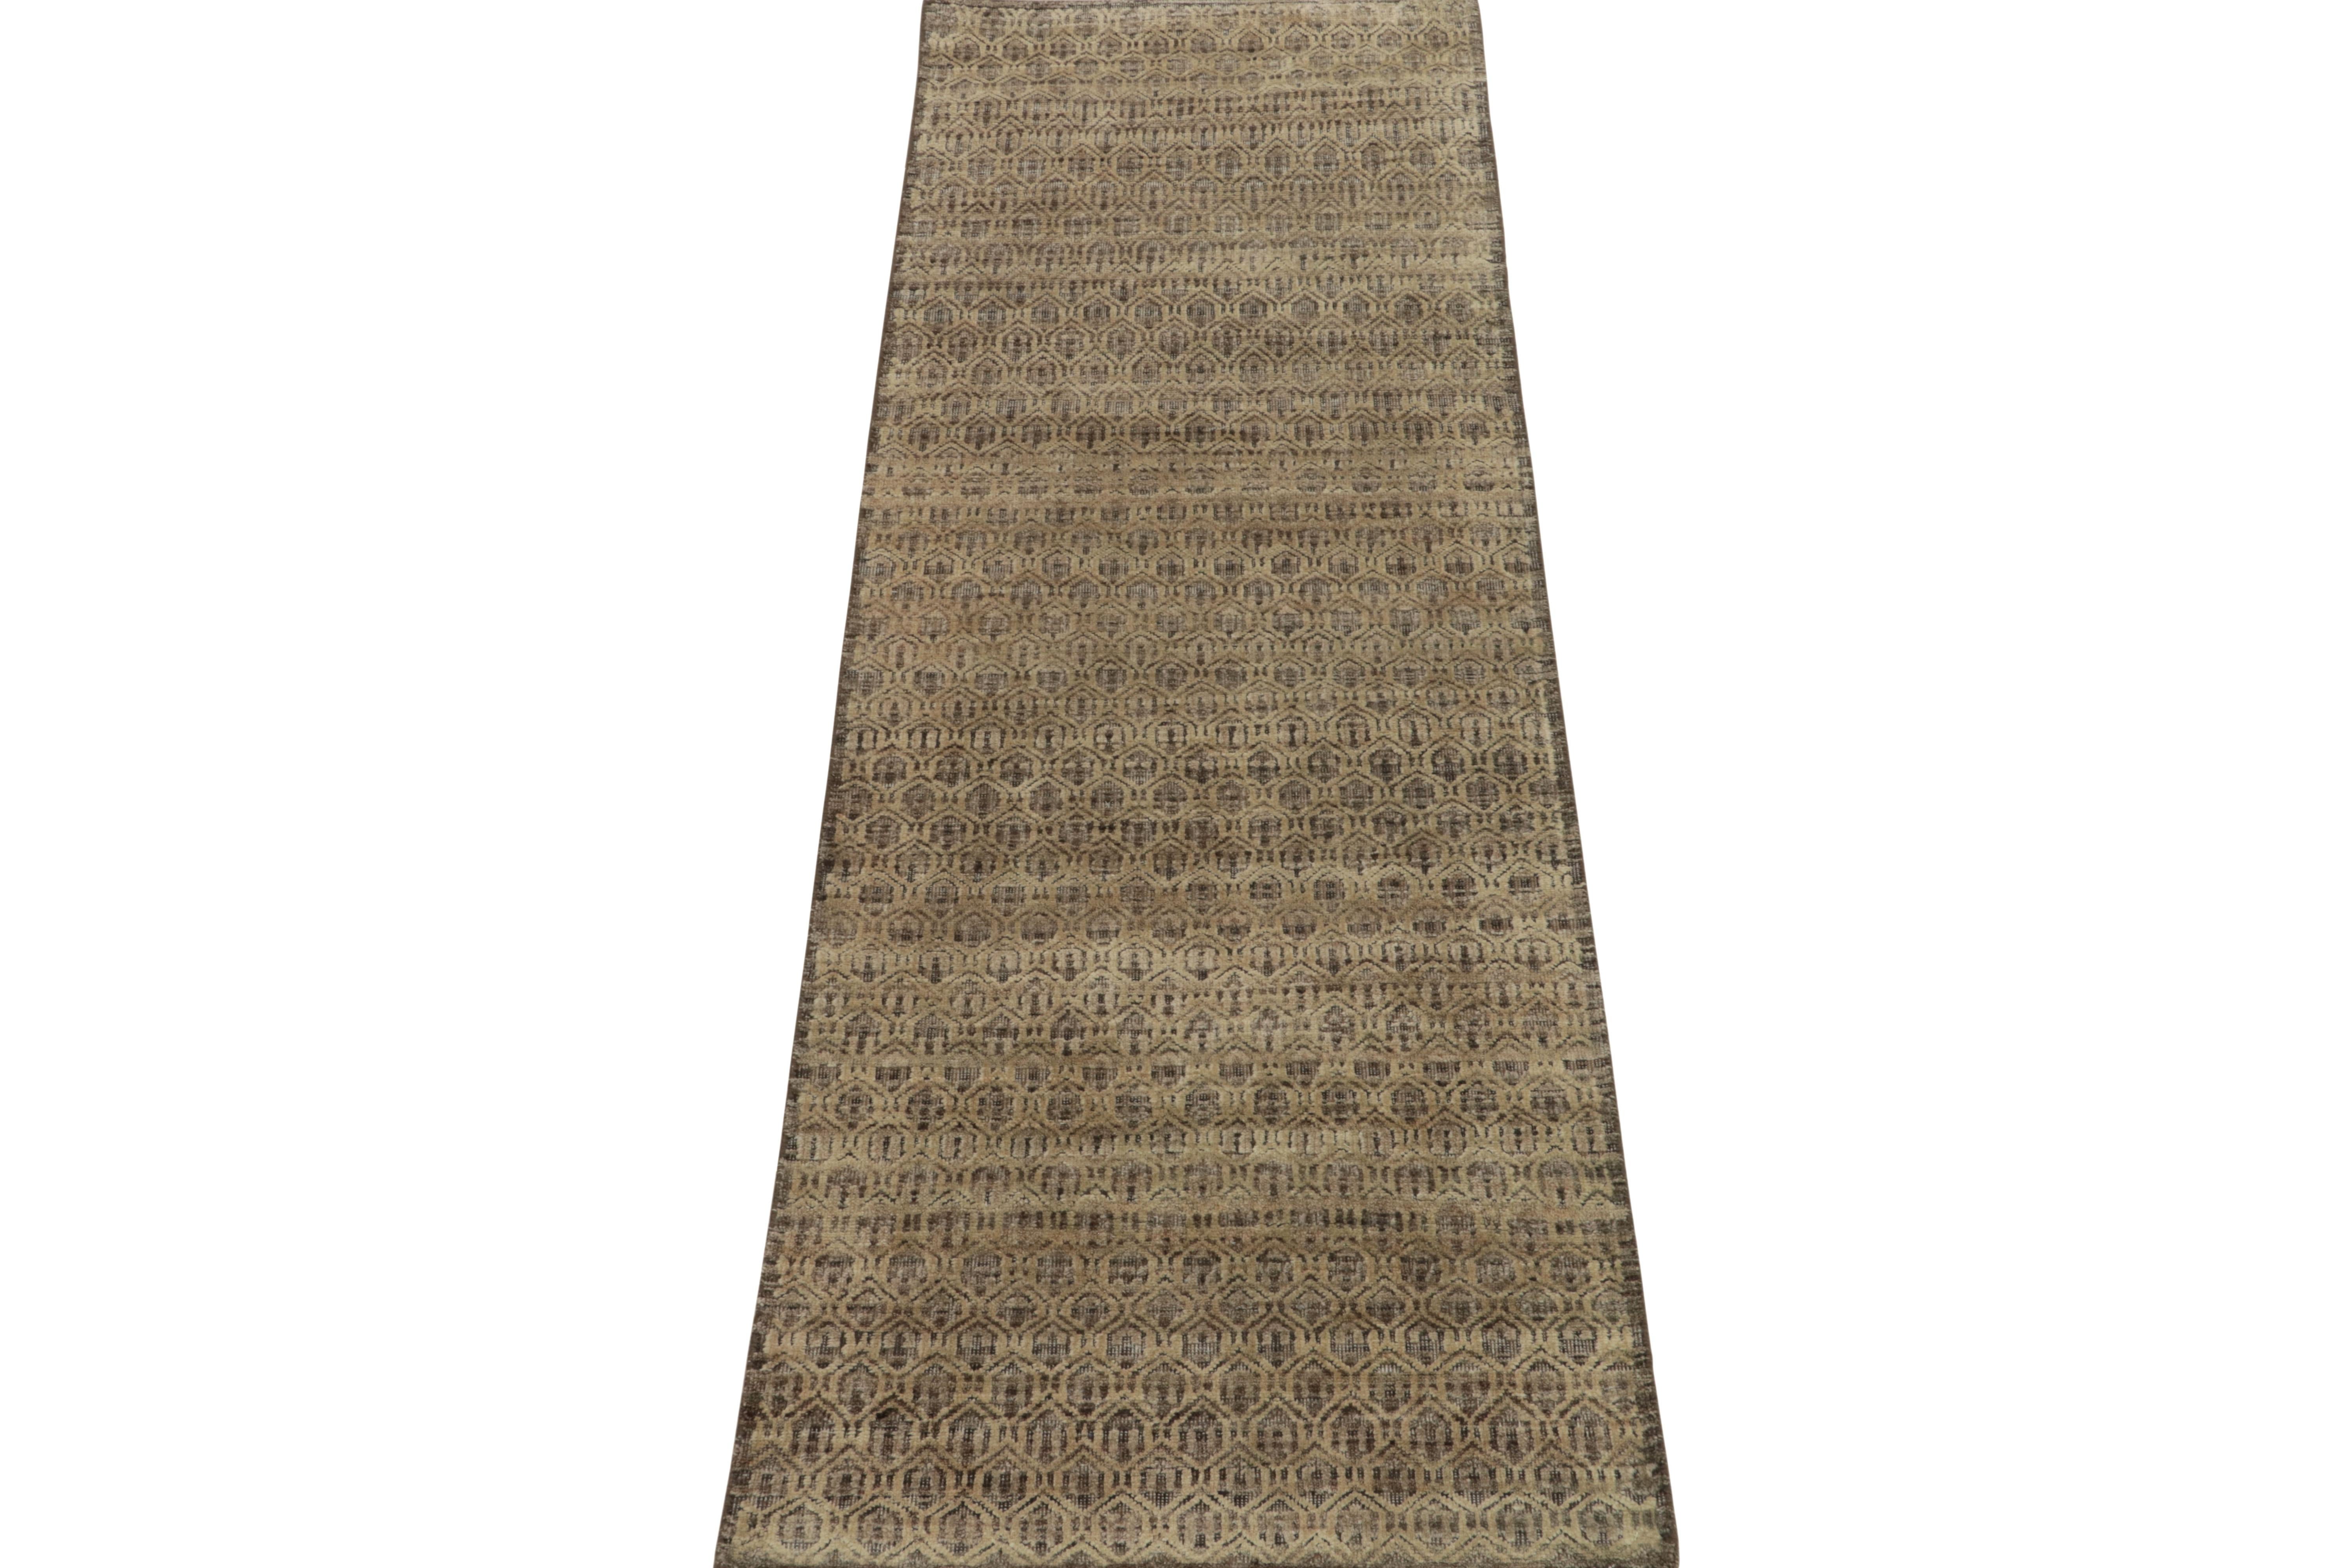 Indian Rug & Kilim’s Modern Textural Runner in Beige-Brown High-Low Geometric Patterns For Sale